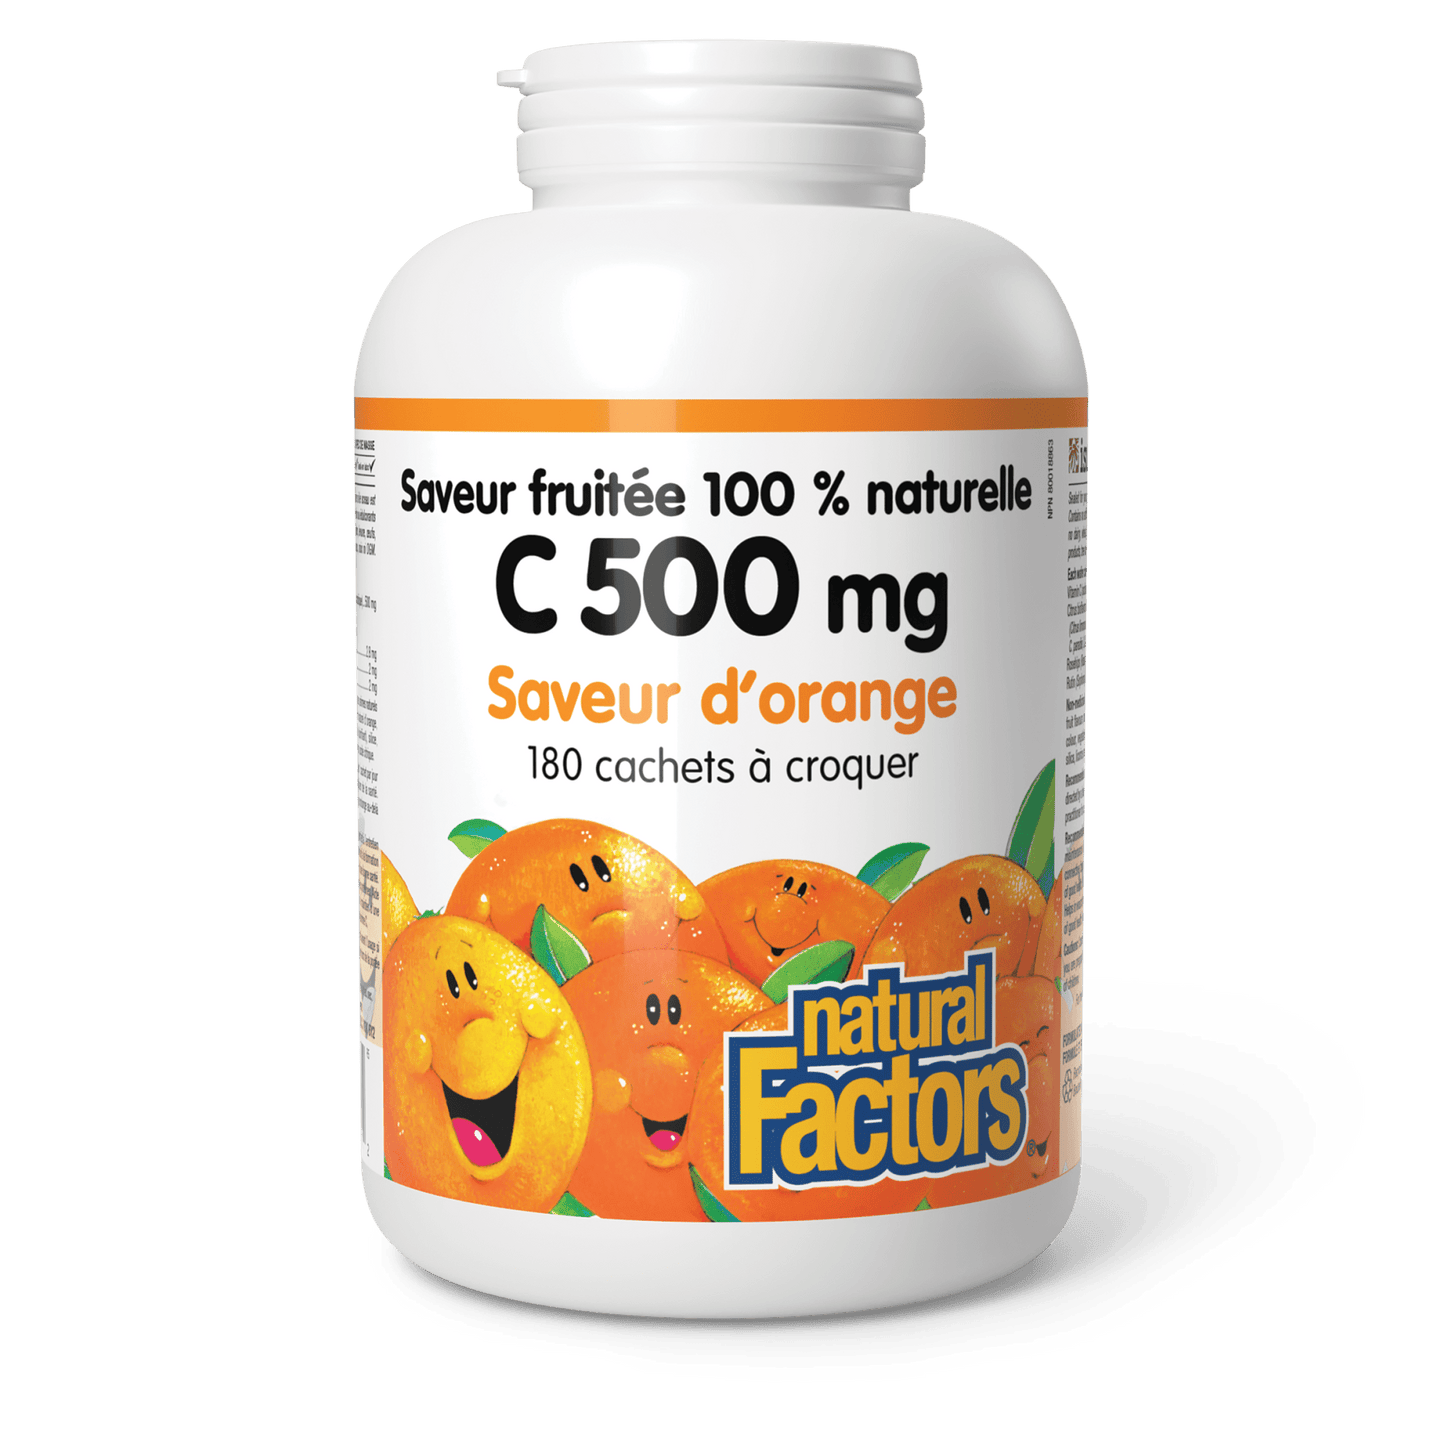 C 500 mg saveur fruitée 100 % naturelle, saveur d’orange, Natural Factors|v|image|1331